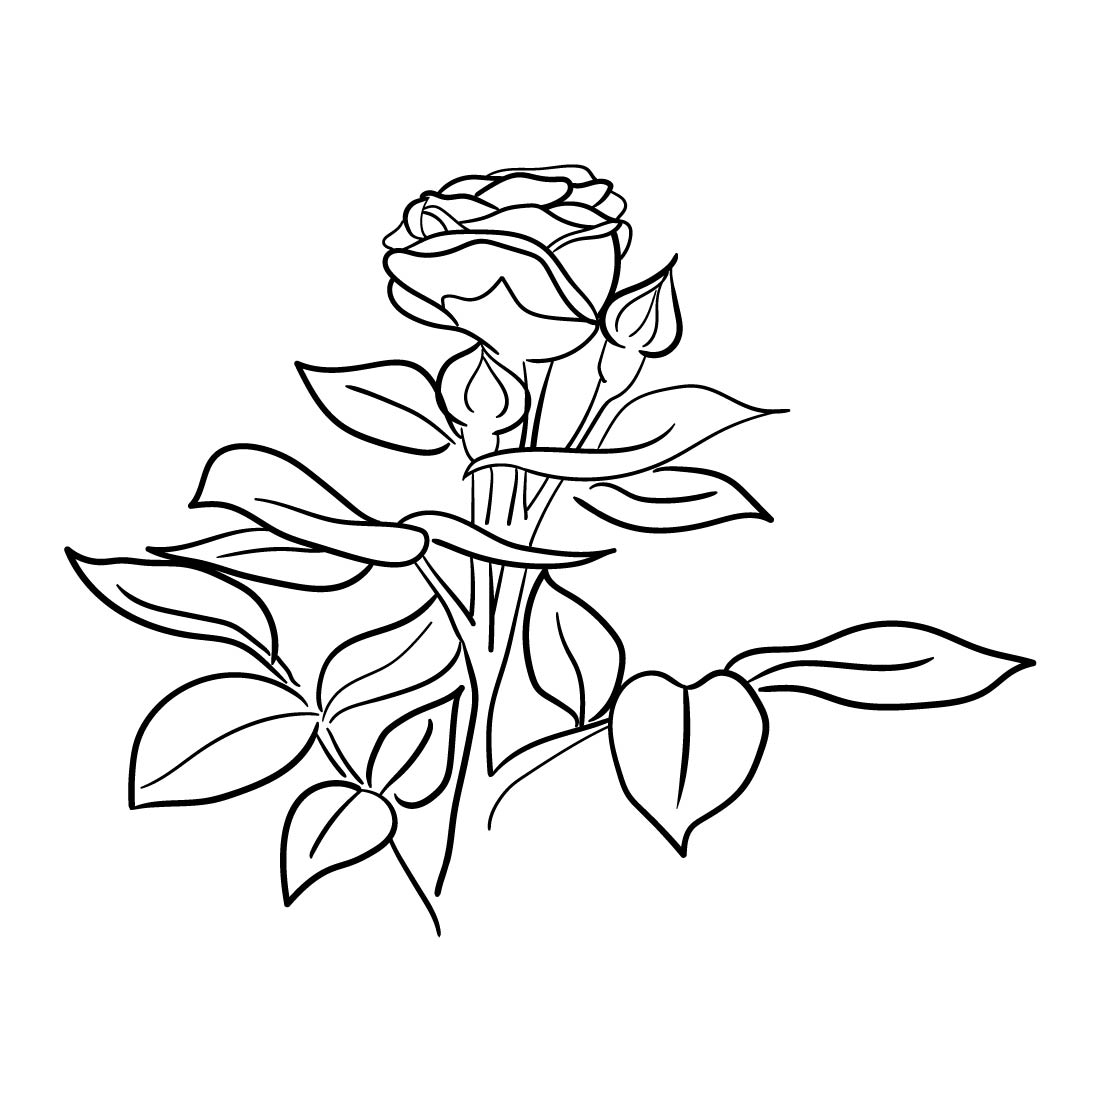 Hand Drawn Roses Vector Illustration.